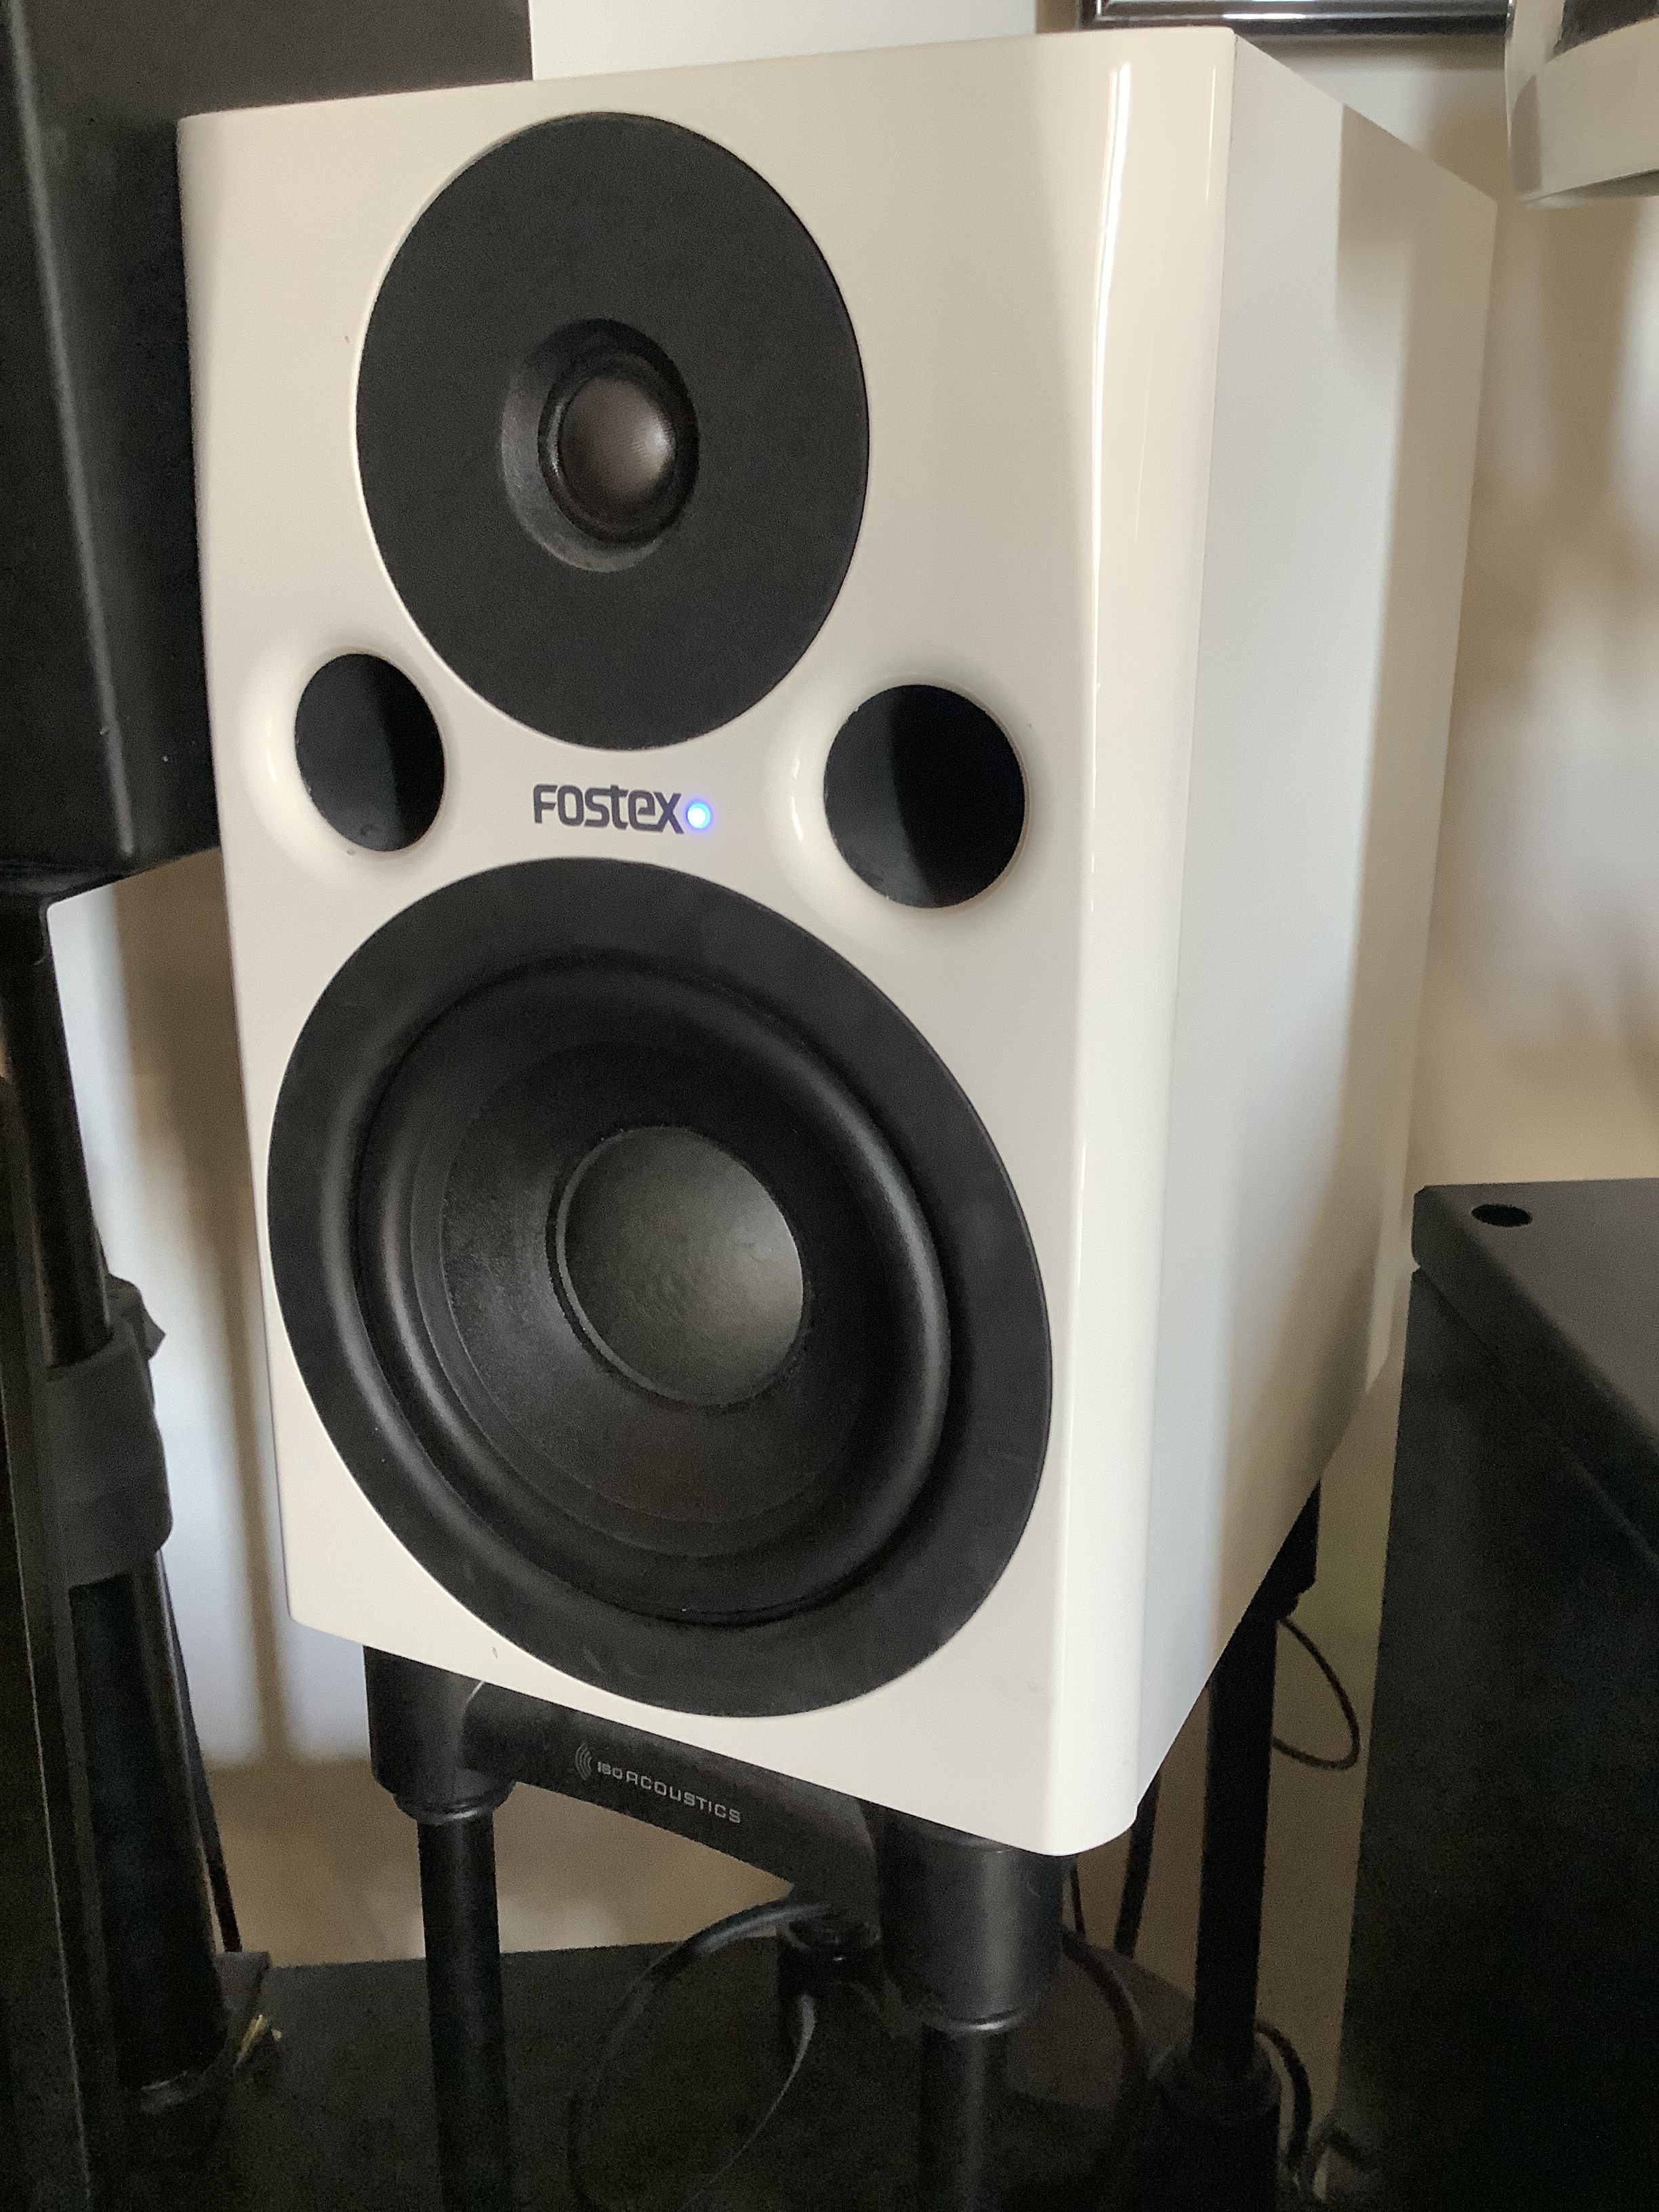 PM0.5n - Fostex PM0.5n - Audiofanzine